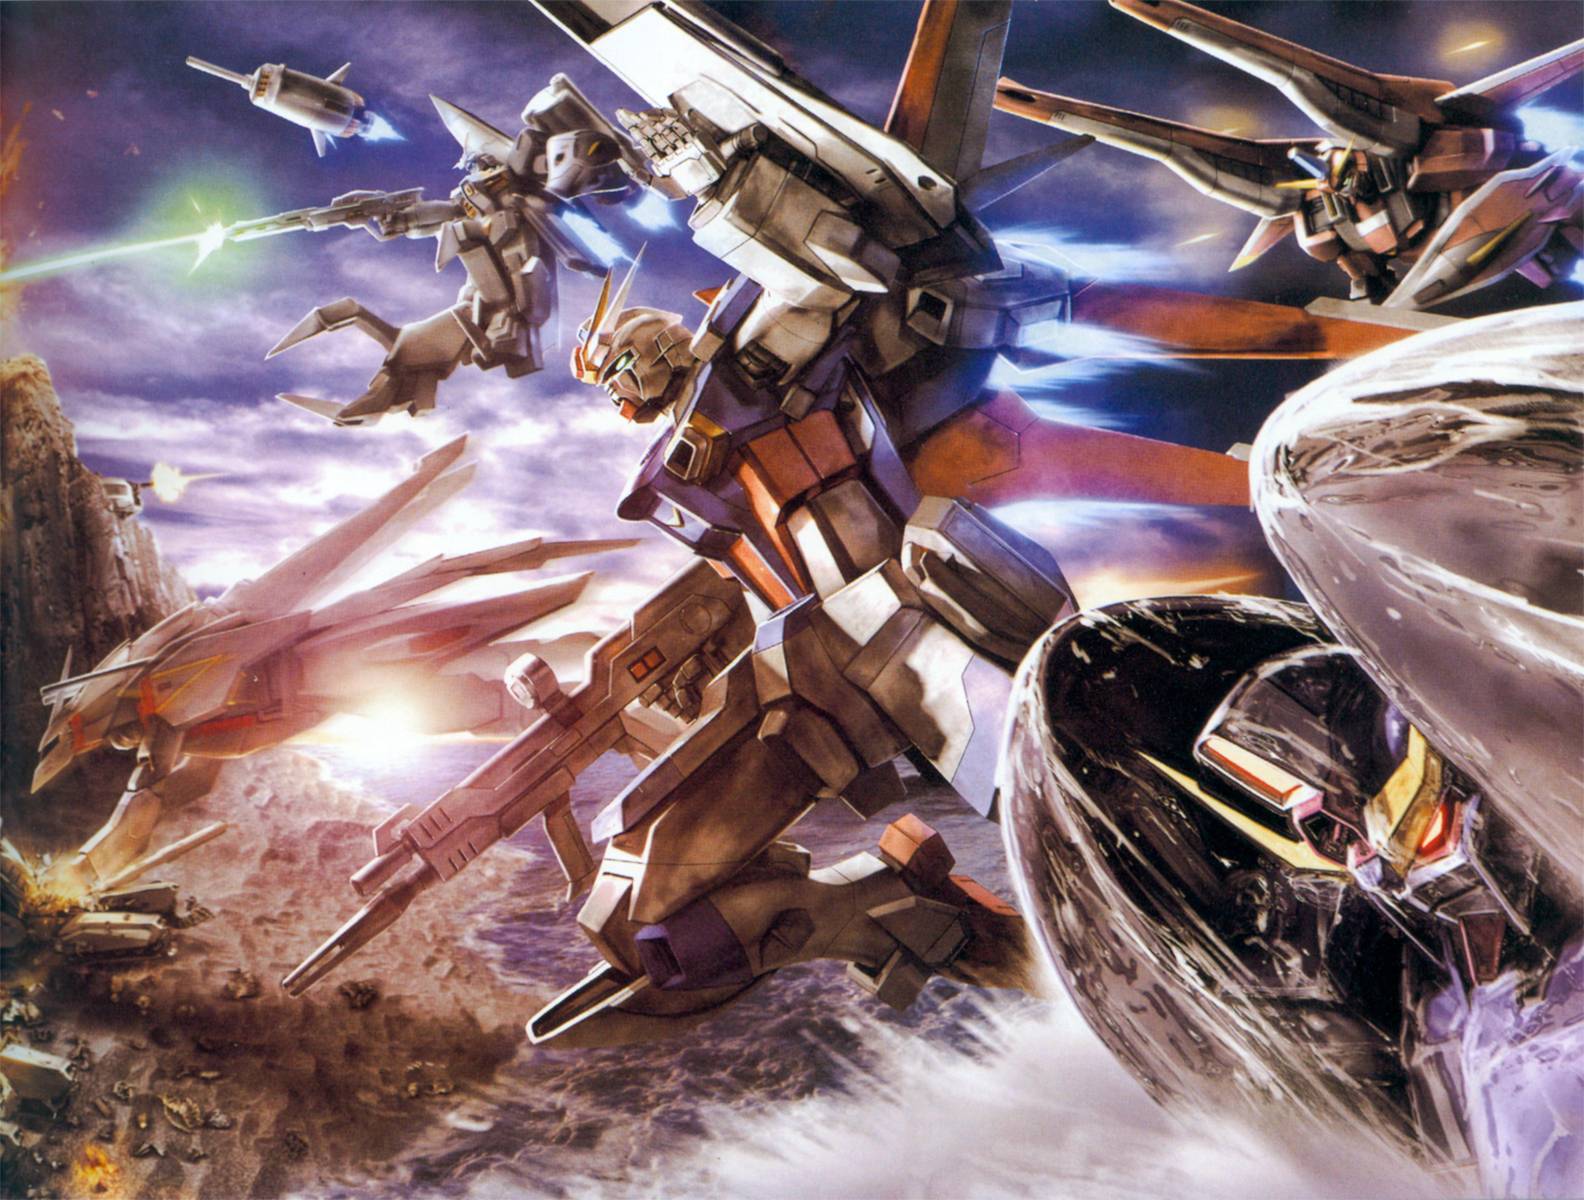 Mobile Suit Gundam Wallpapers Top Free Mobile Suit Gundam Backgrounds Wallpaperaccess